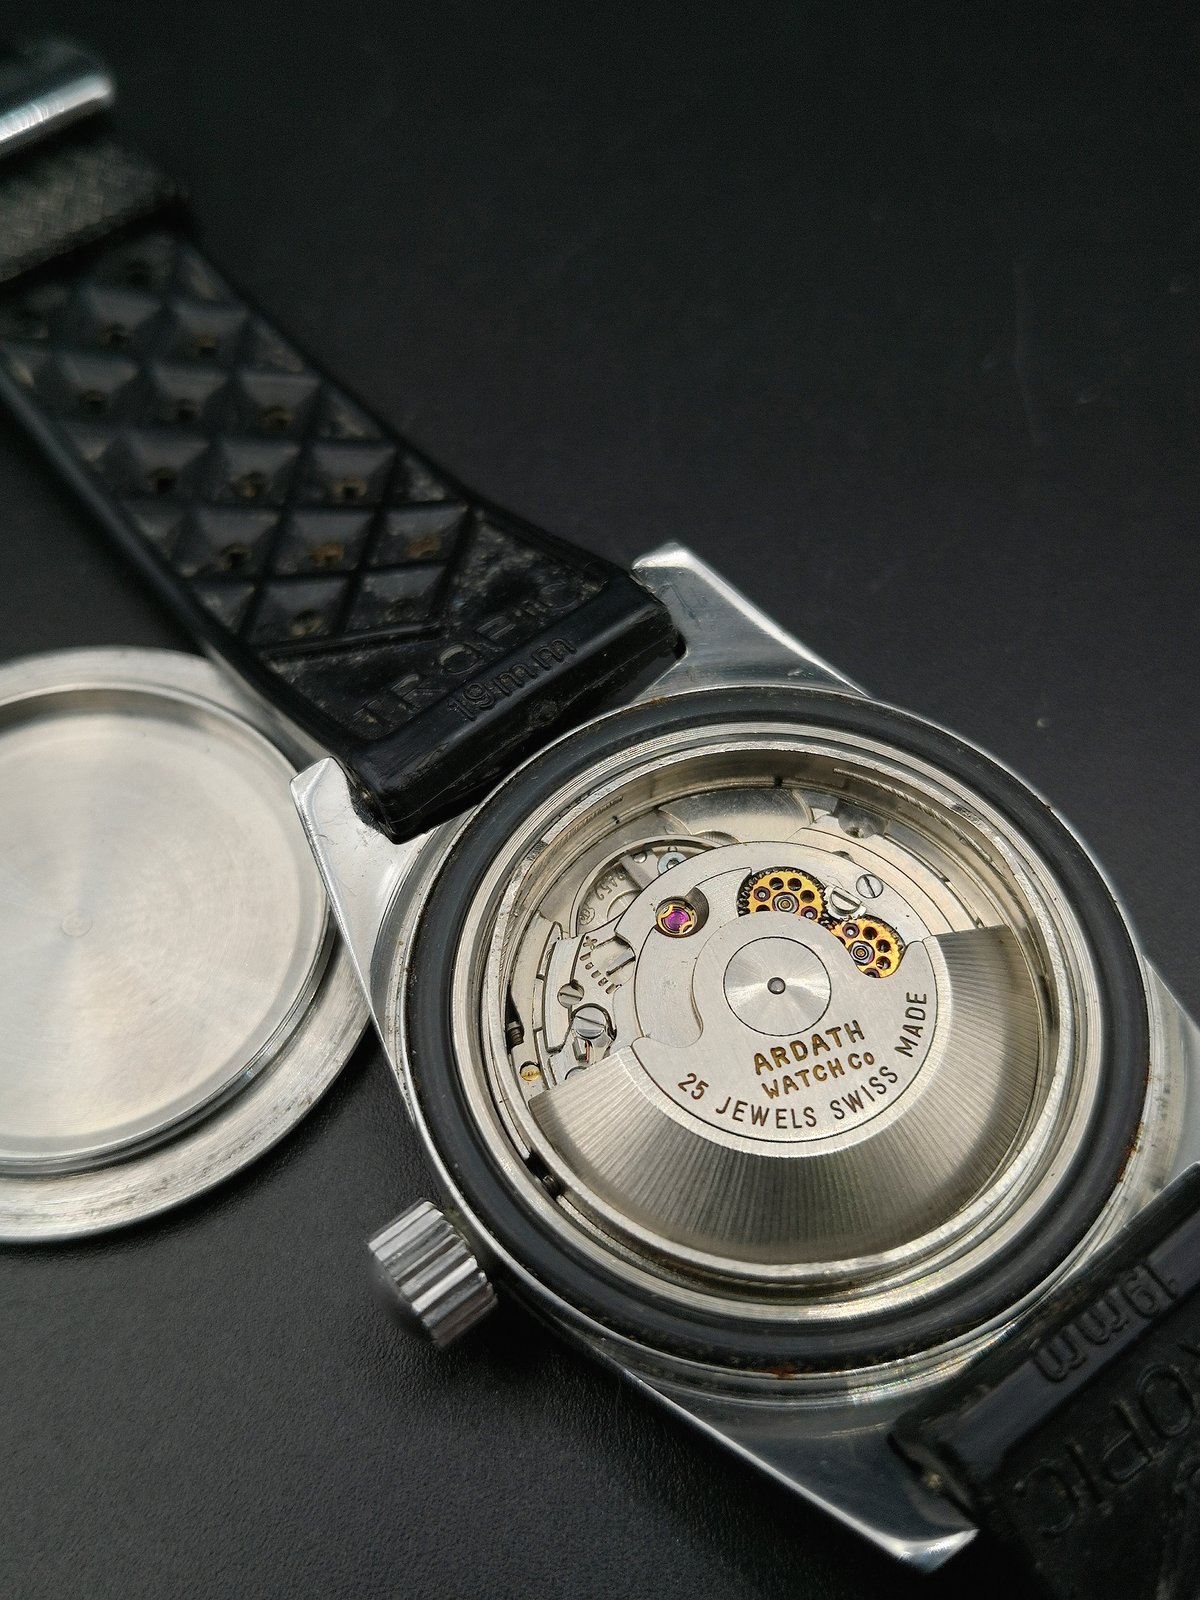 ARDATH - Super Long Distance - Swiss Made Dual-Movement Automatic Watch -  Online Watch Deals